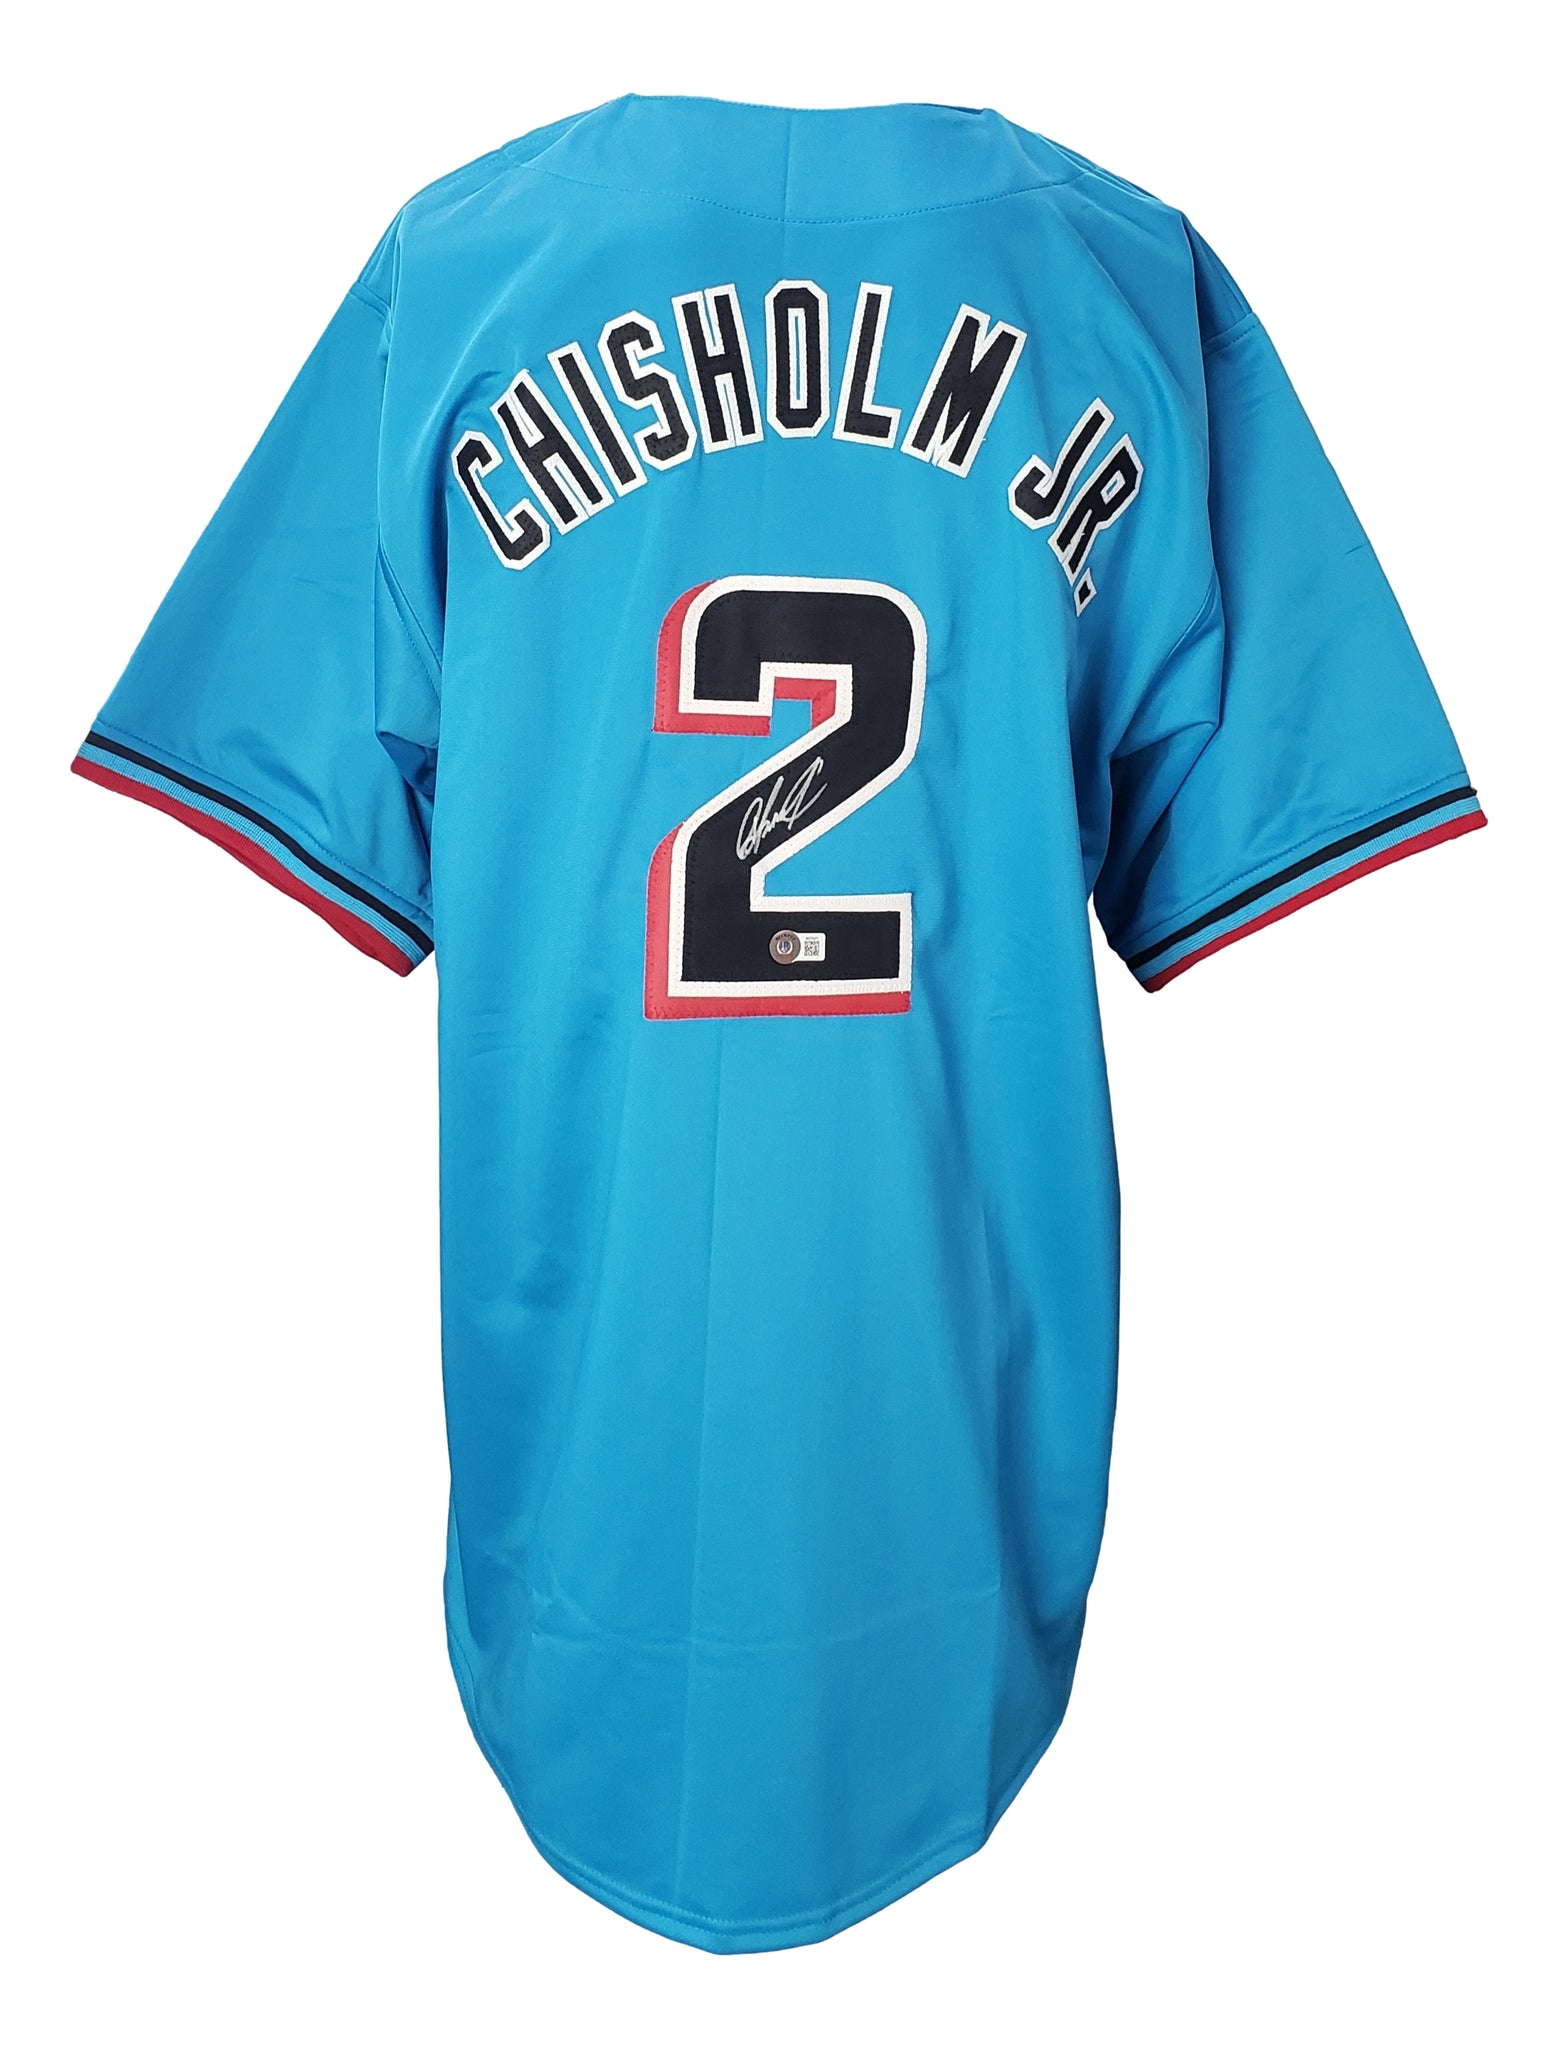 Jazz Chisholm Jr Signed Custom Blue Pro-Style Baseball Jersey BAS